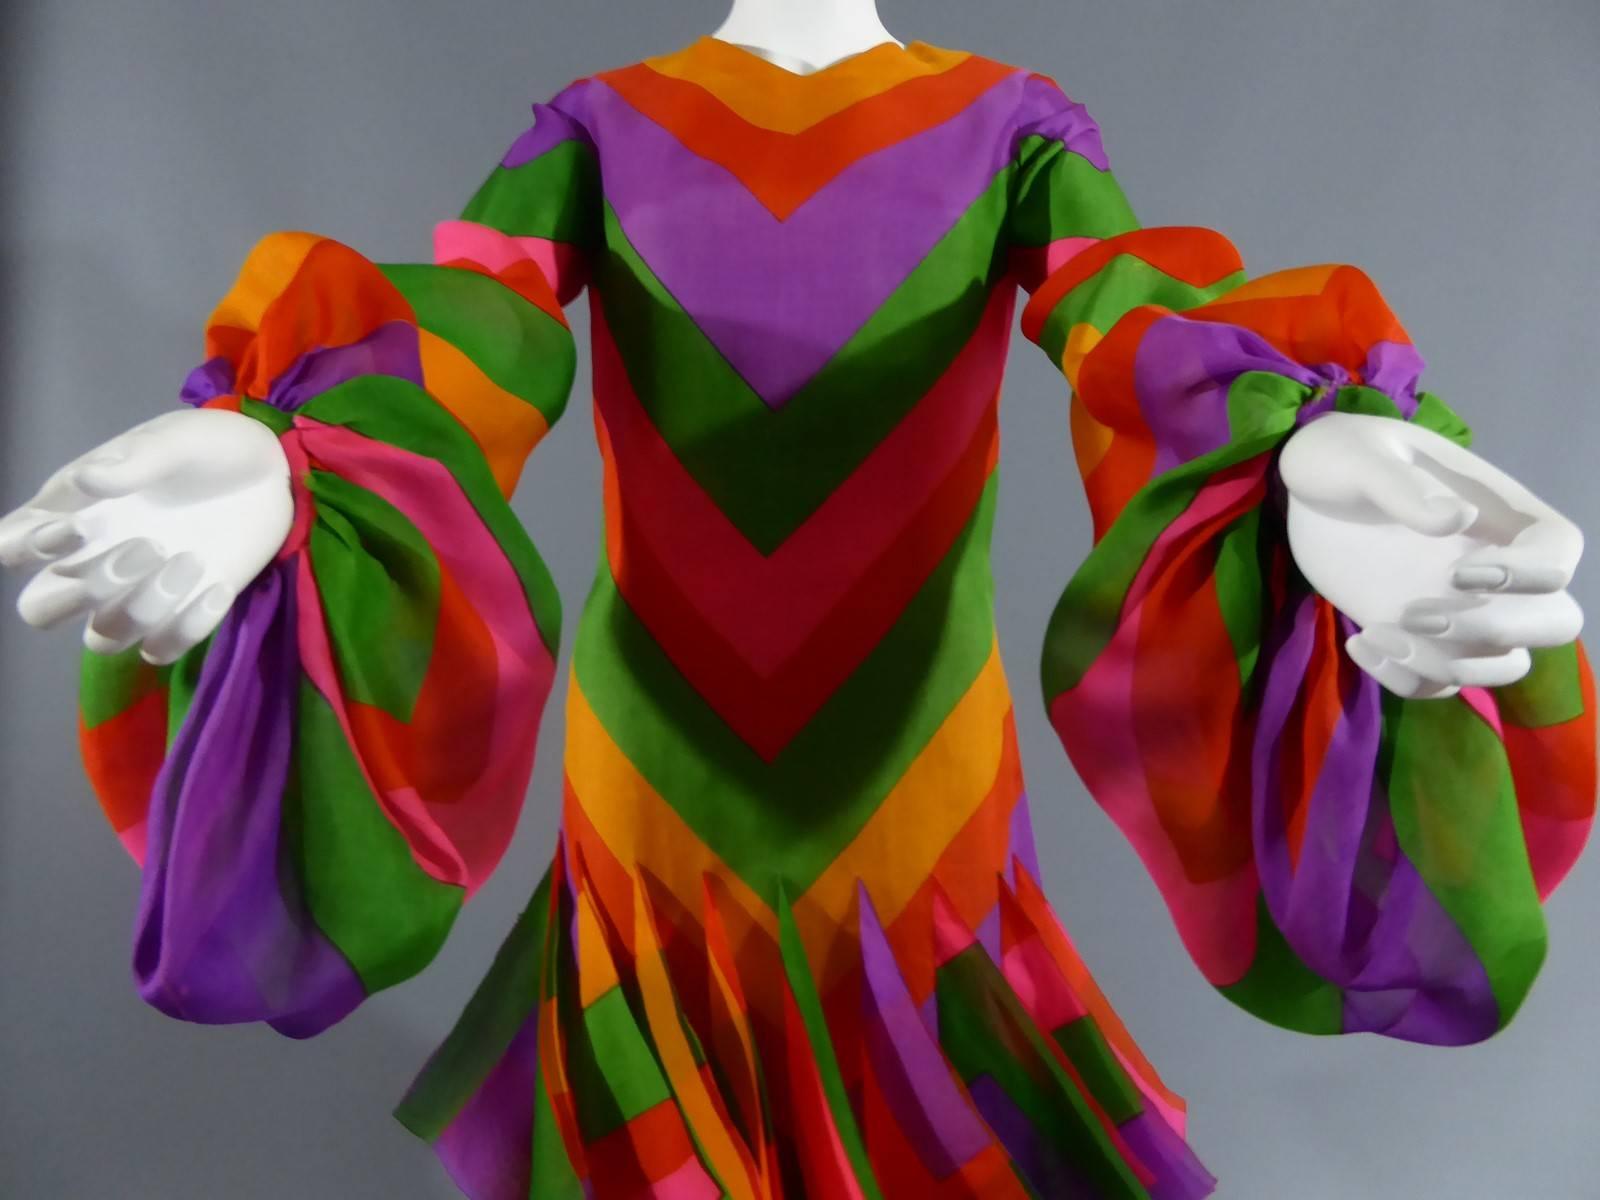 Brown Pierre Cardin Haute Couture Evening Dress, circa 1970